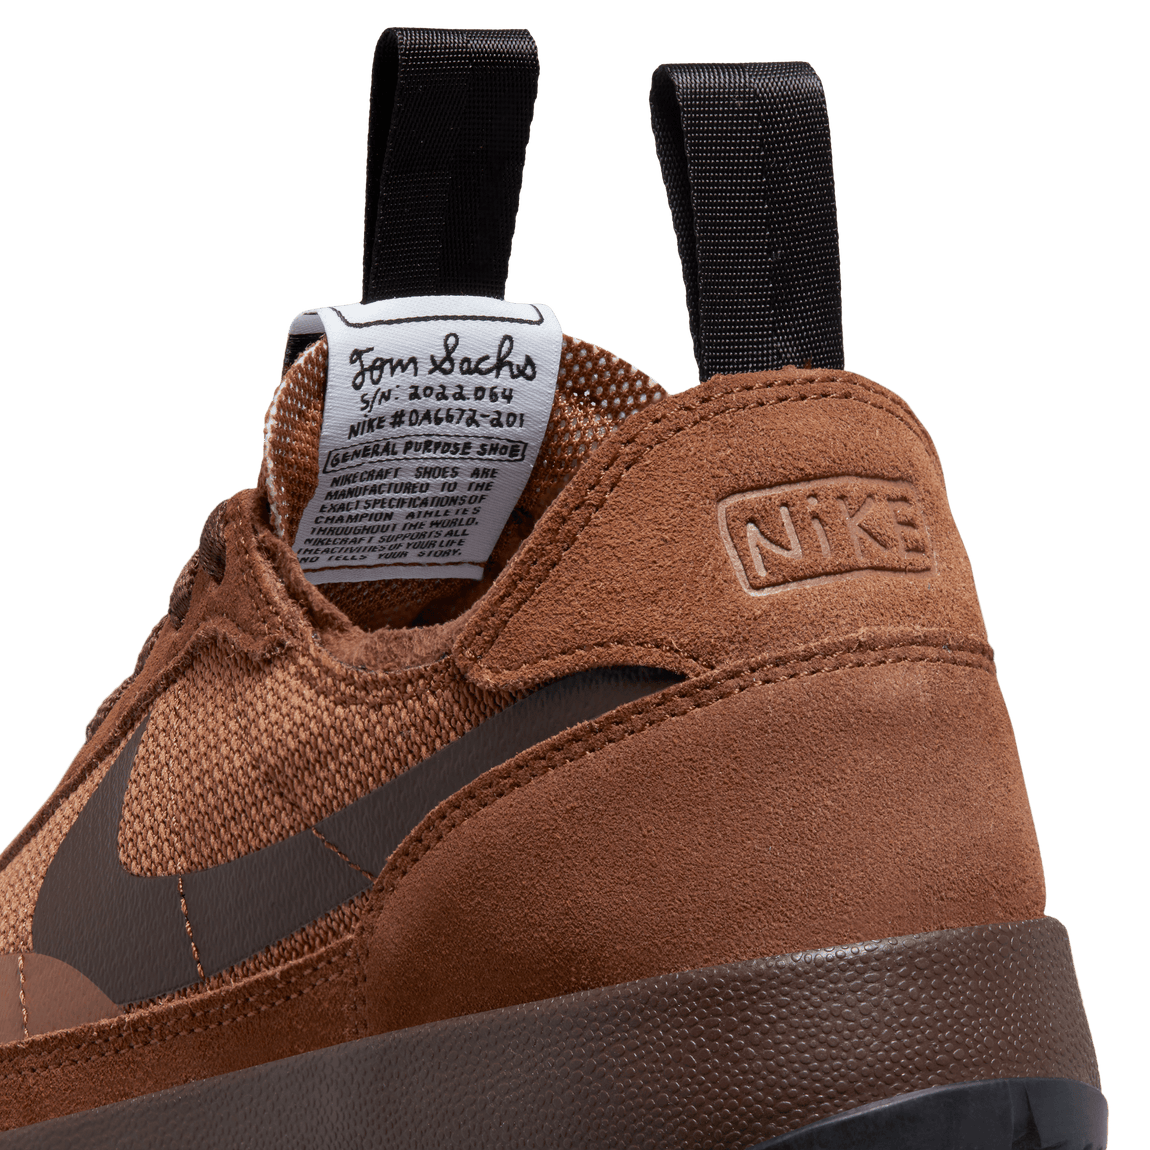 NikeCraft General Purpose Shoe Tom Sachs Field Brown Size 12.5